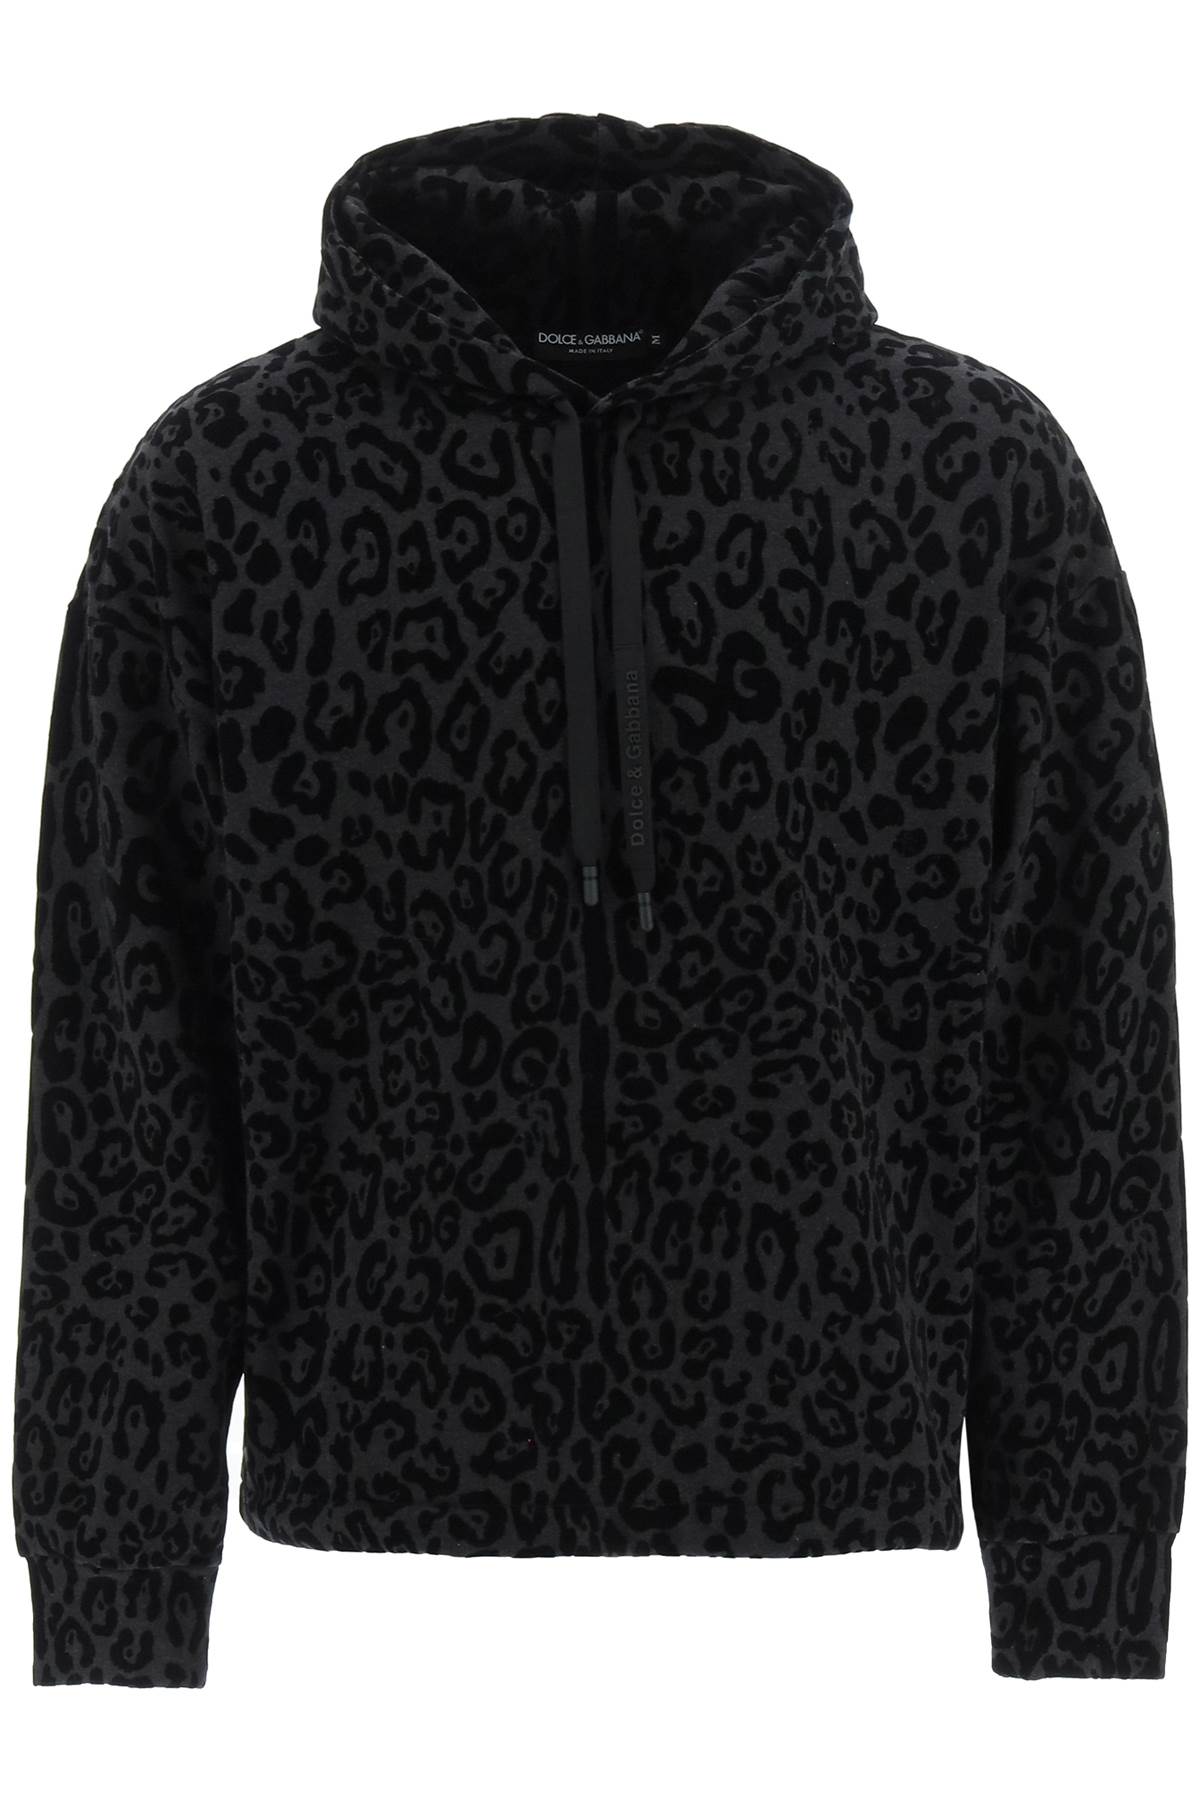 Dolce & Gabbana Flocked Leopard Hoodie